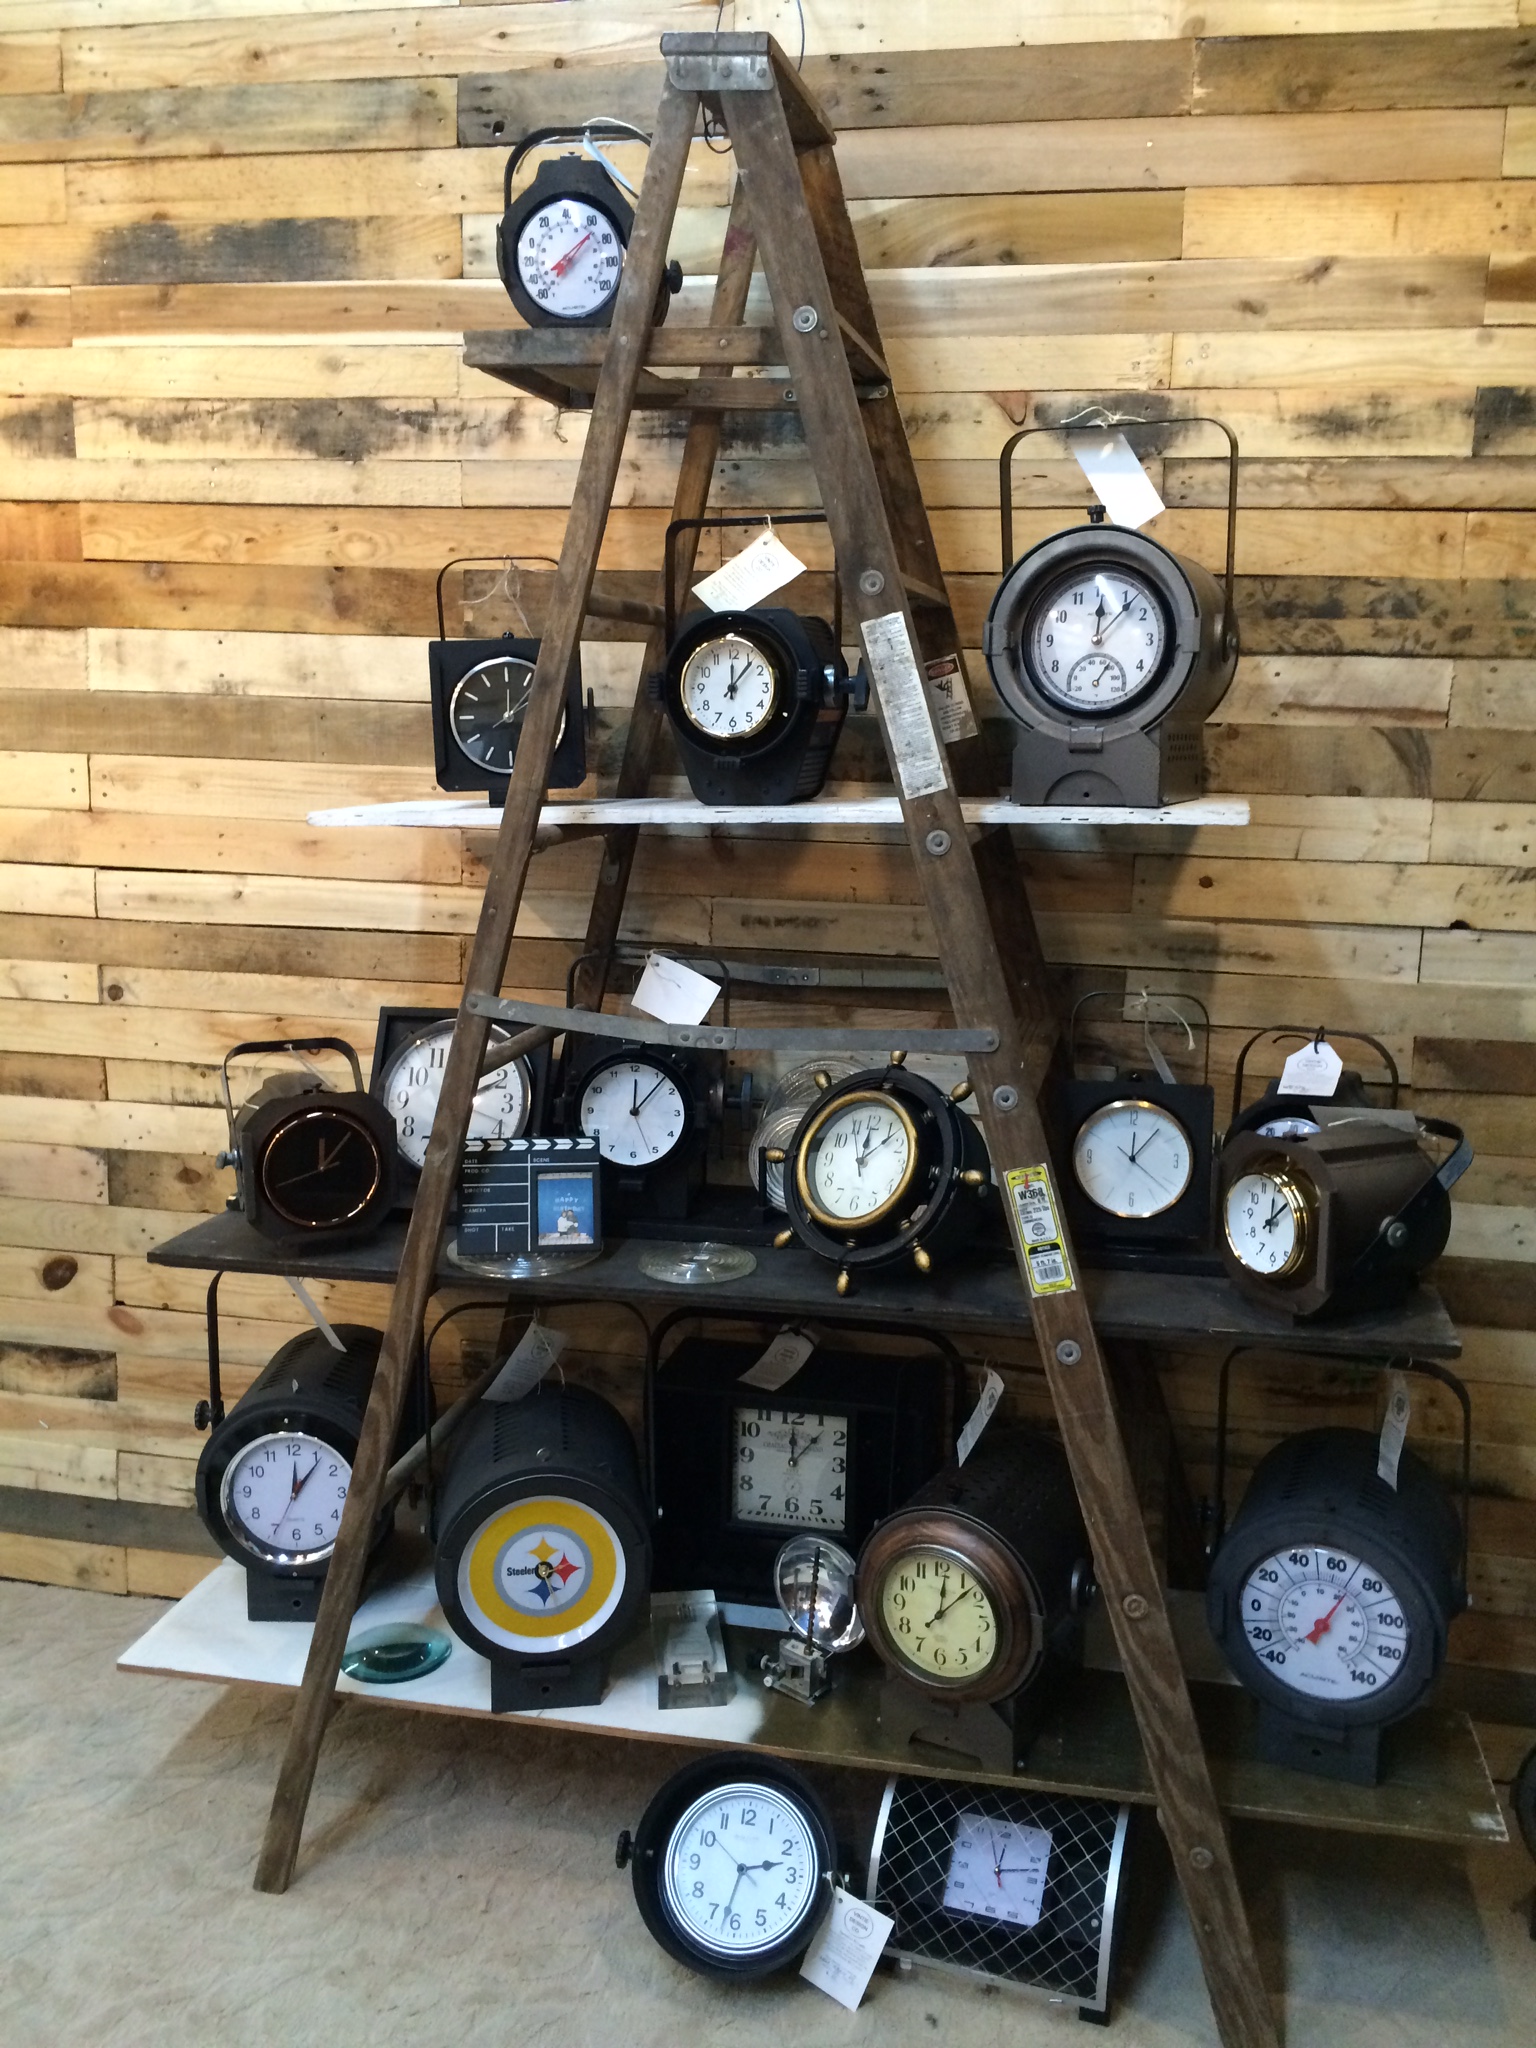 A display of clocks on a ladder